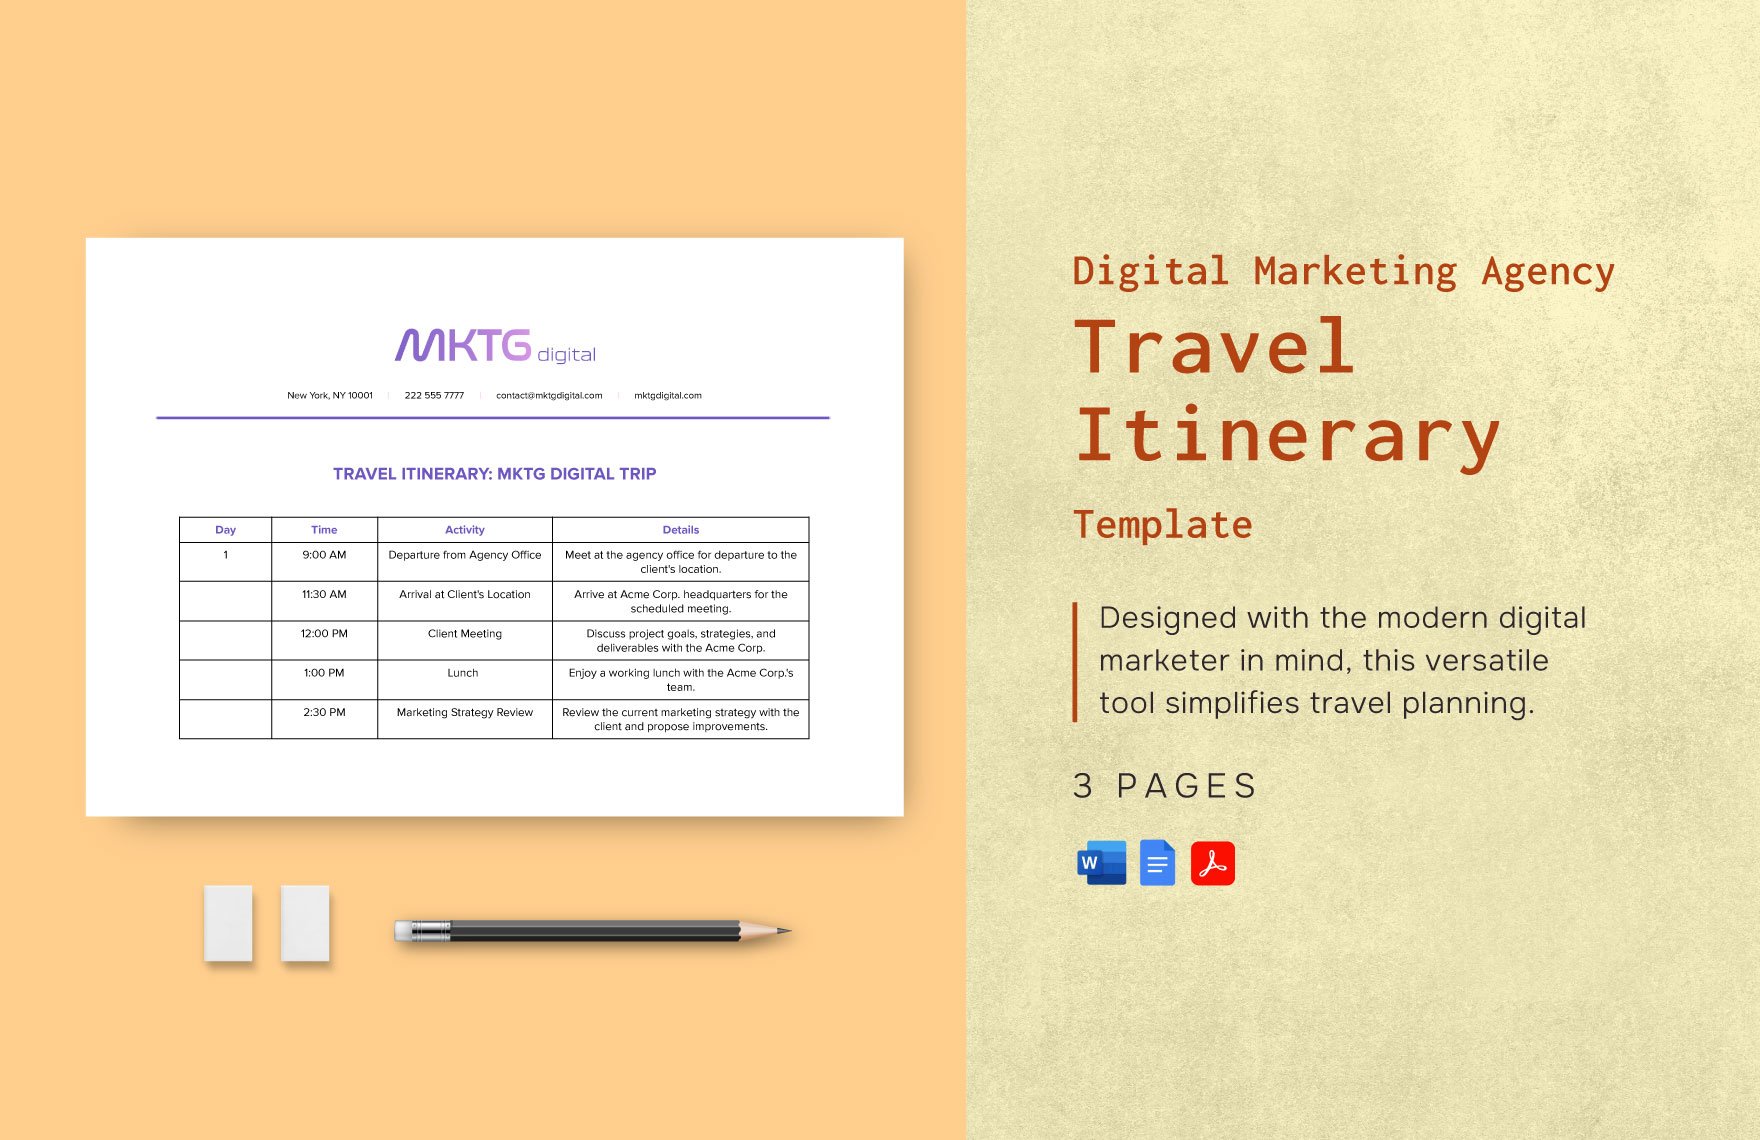 Digital Marketing Agency Travel Itinerary Template